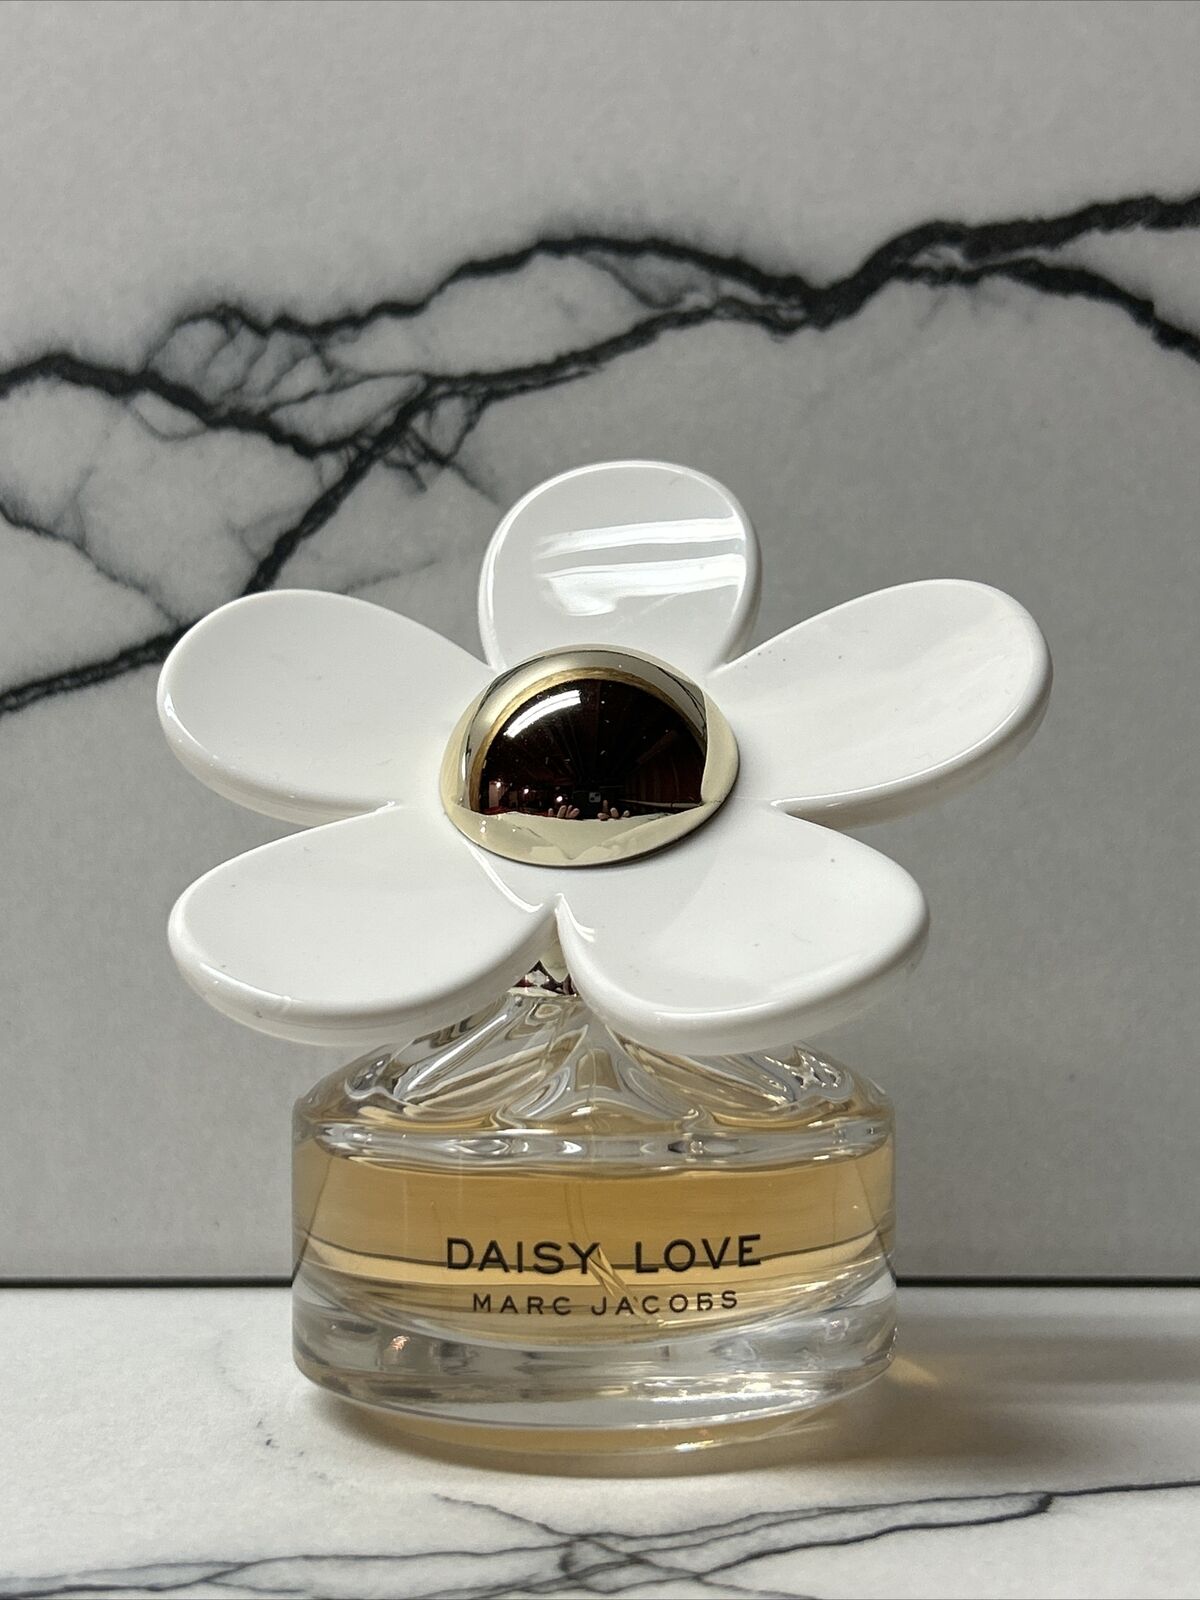 Marc Jacobs “Daisy Love” Eau De Toilette (Perfume) Spray 1.0 fl. oz.